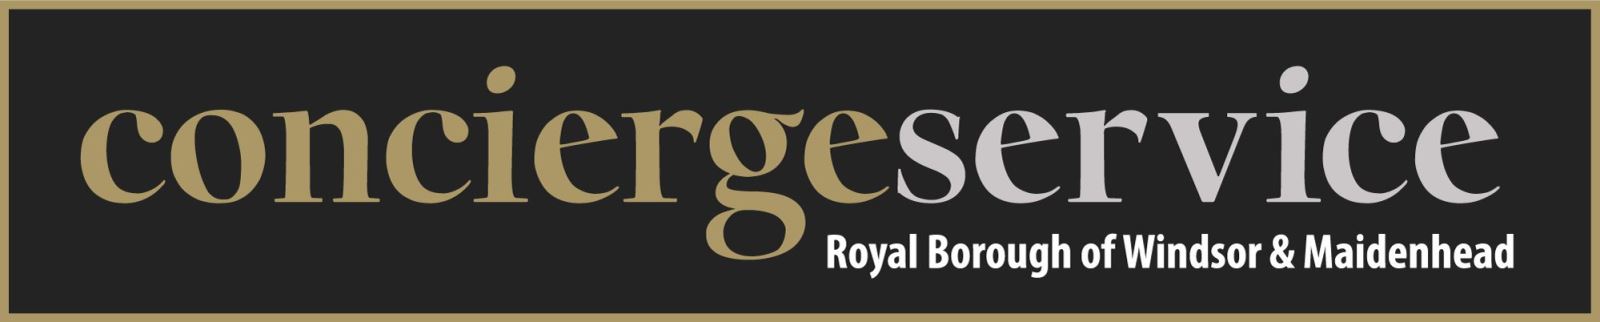 Royal Borough of Windsor and Maidenhead Concierge Service logo